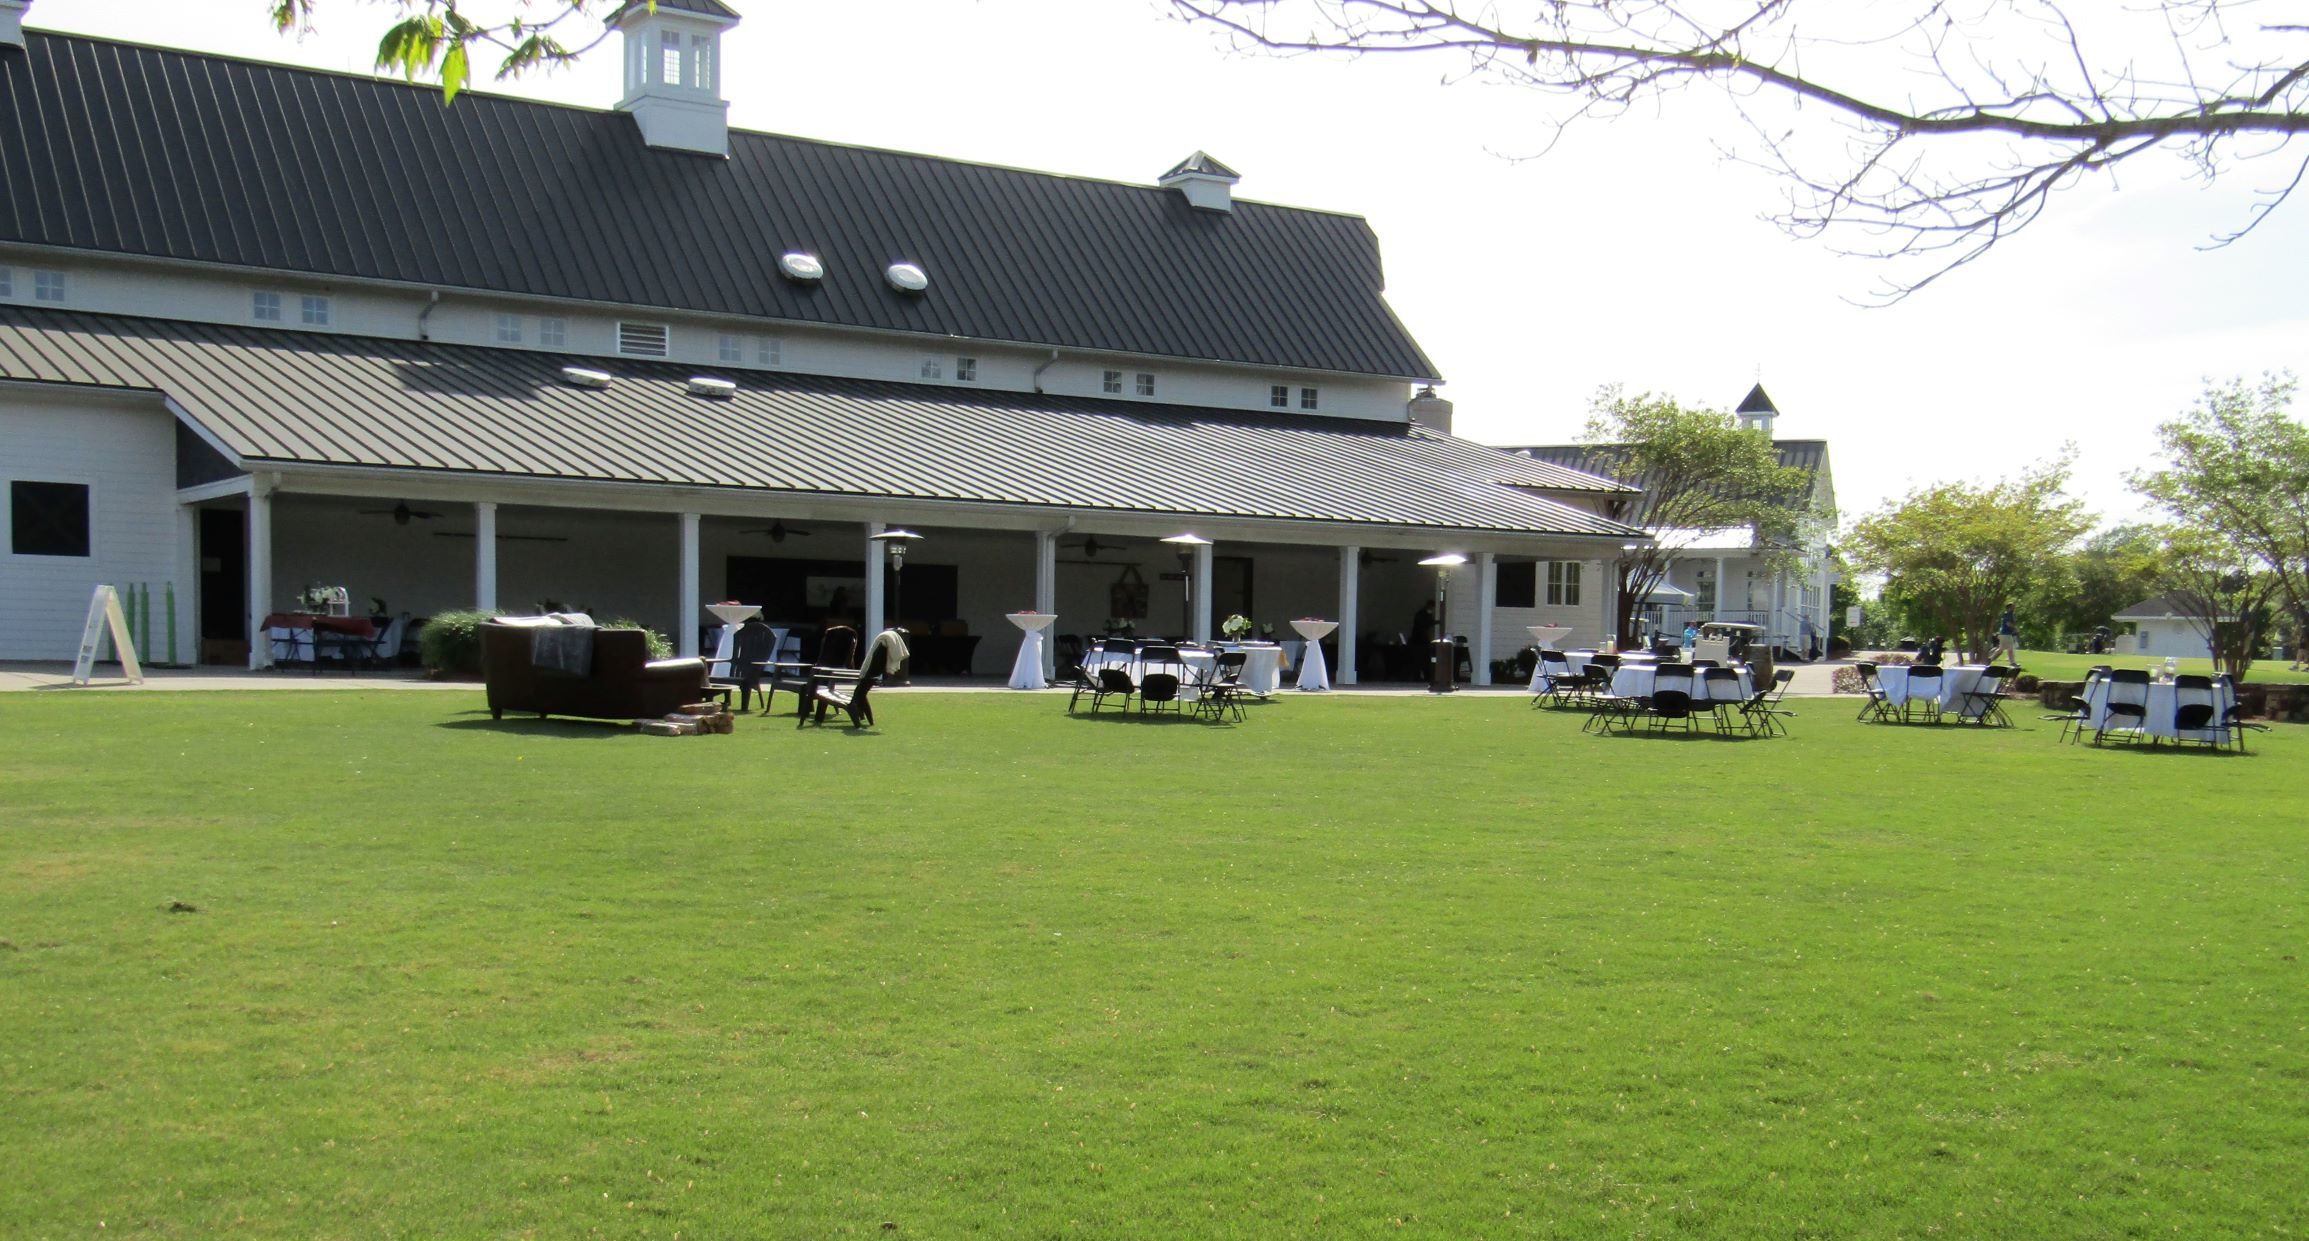 Springfield Golf Club